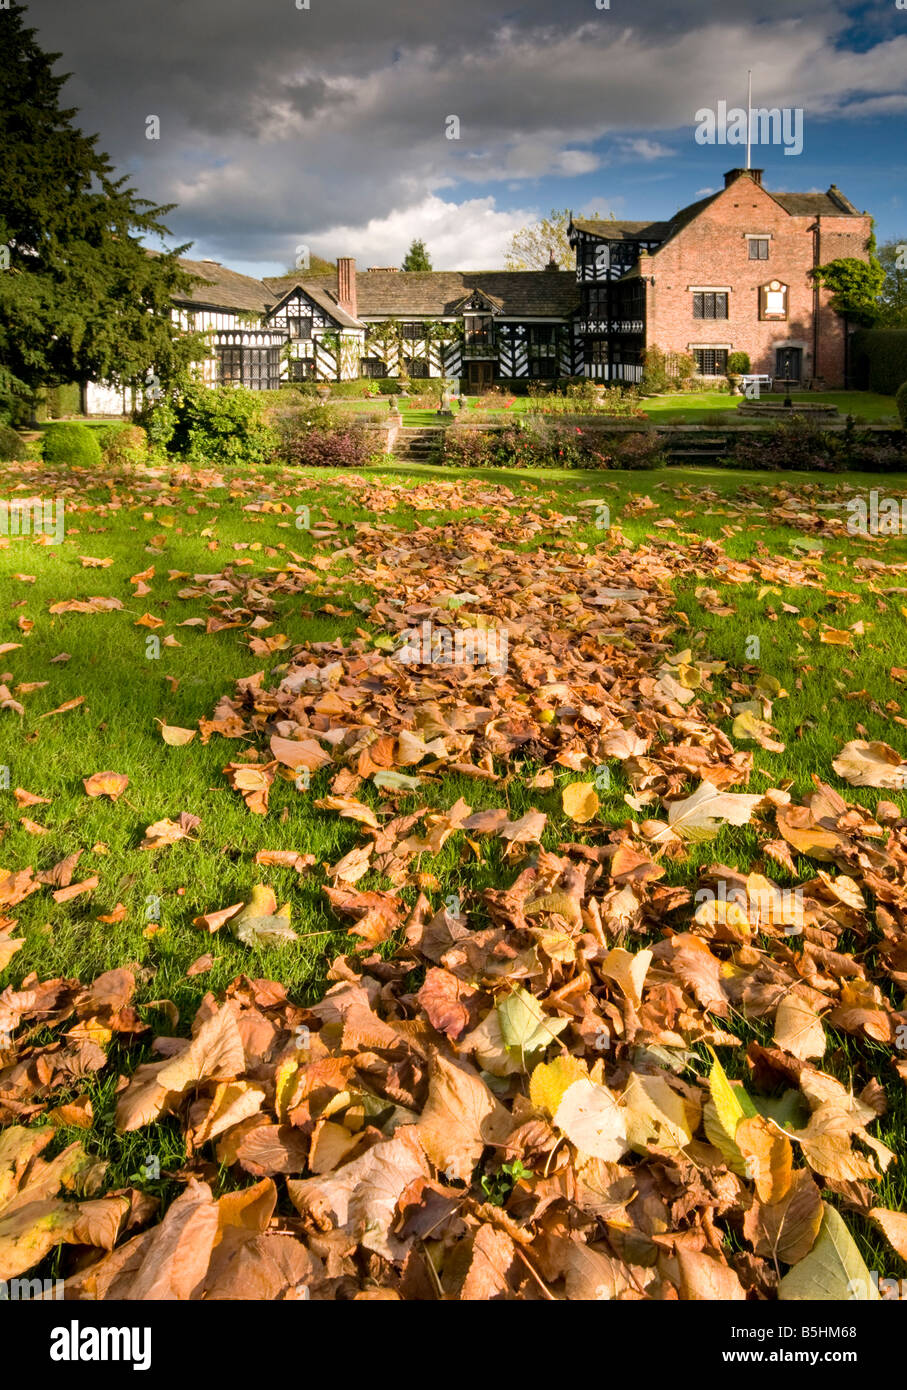 Autumn at Gawsworth Old Hall, Gawsworth, Near Macclesfield, Cheshire, England, UK Stock Photo